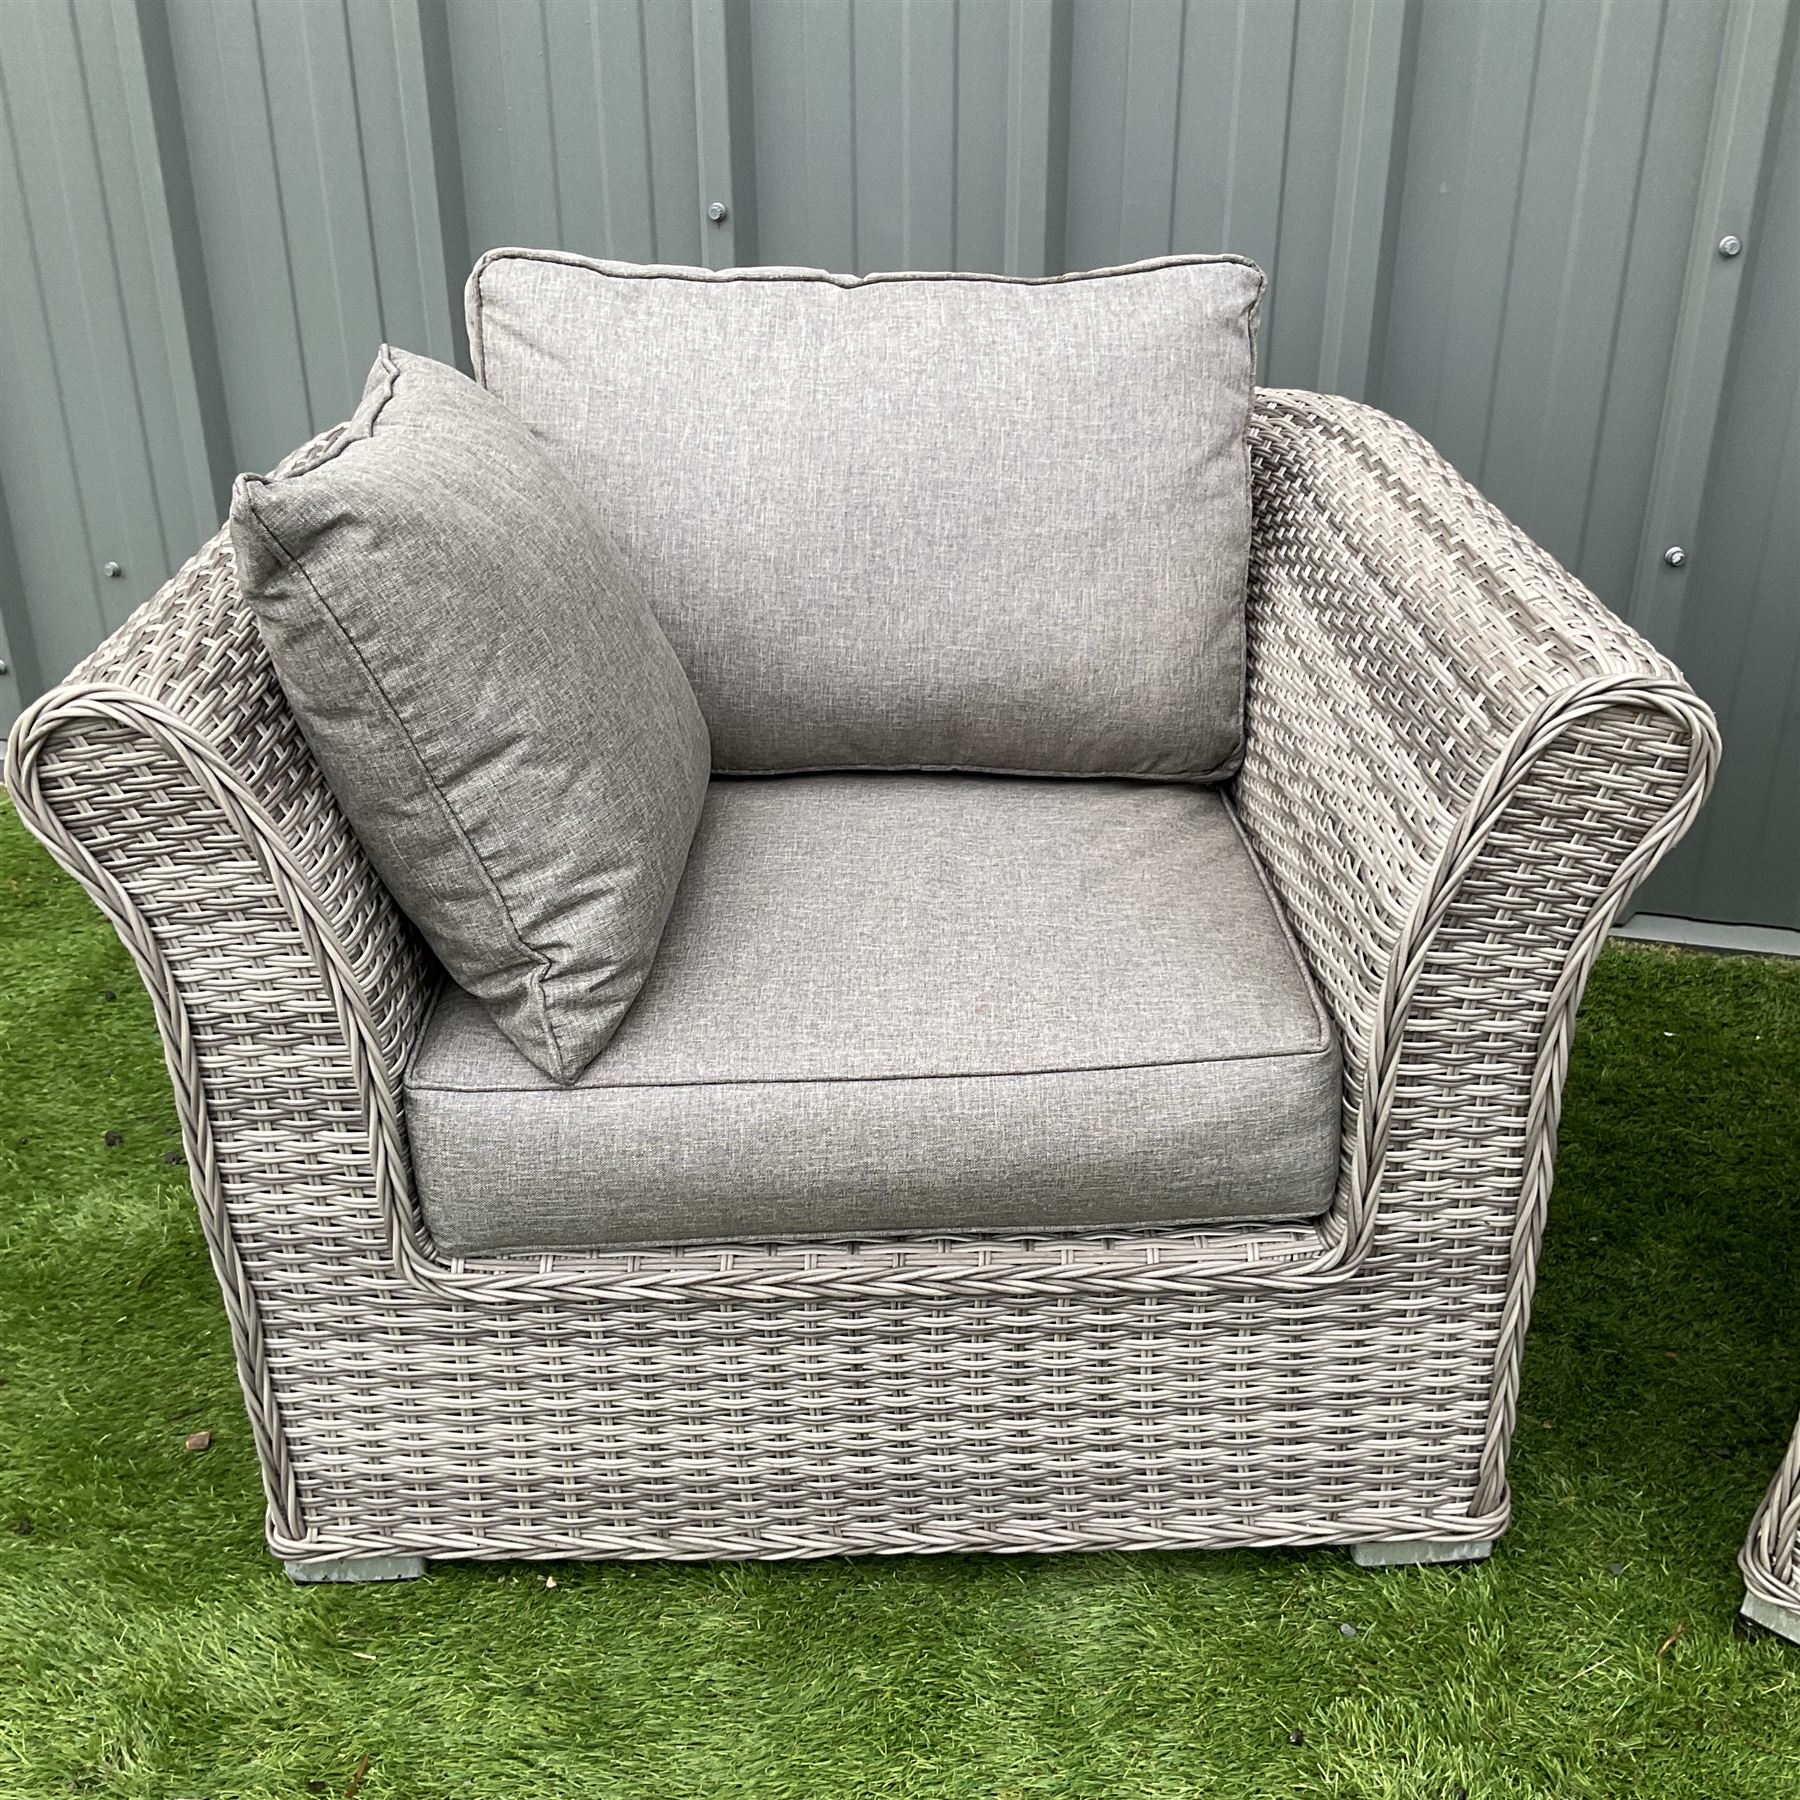 RattanDirect - pair of rattan garden armchairs - Image 5 of 6